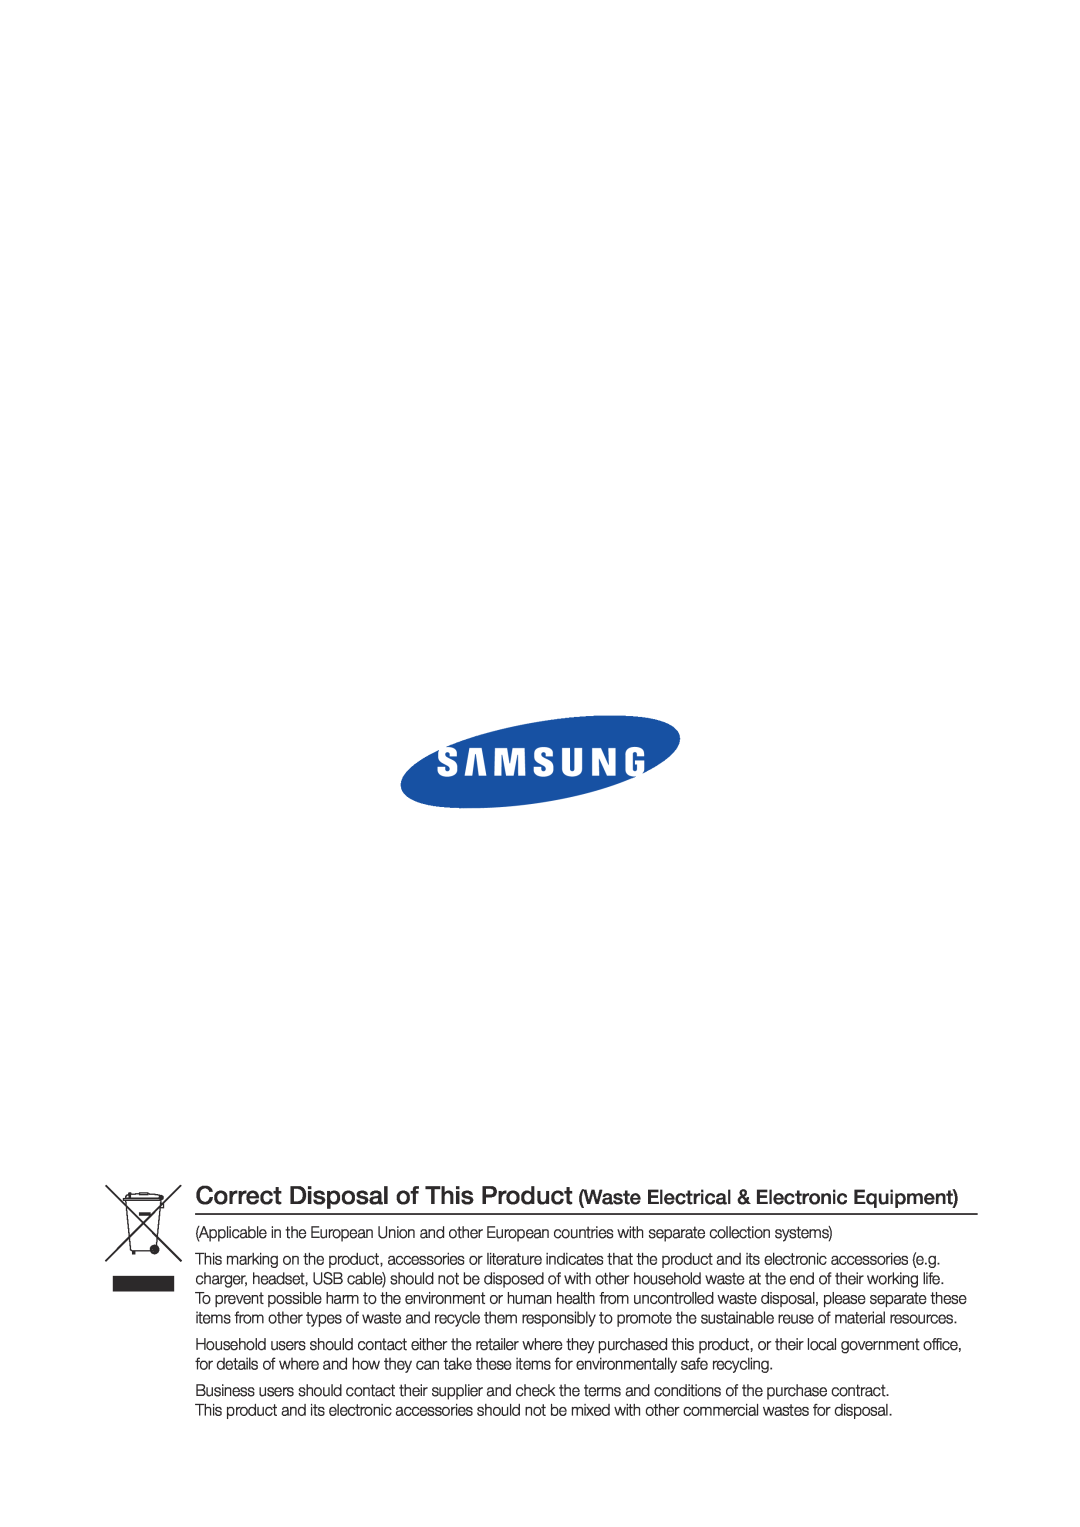 Samsung M5 user manual 